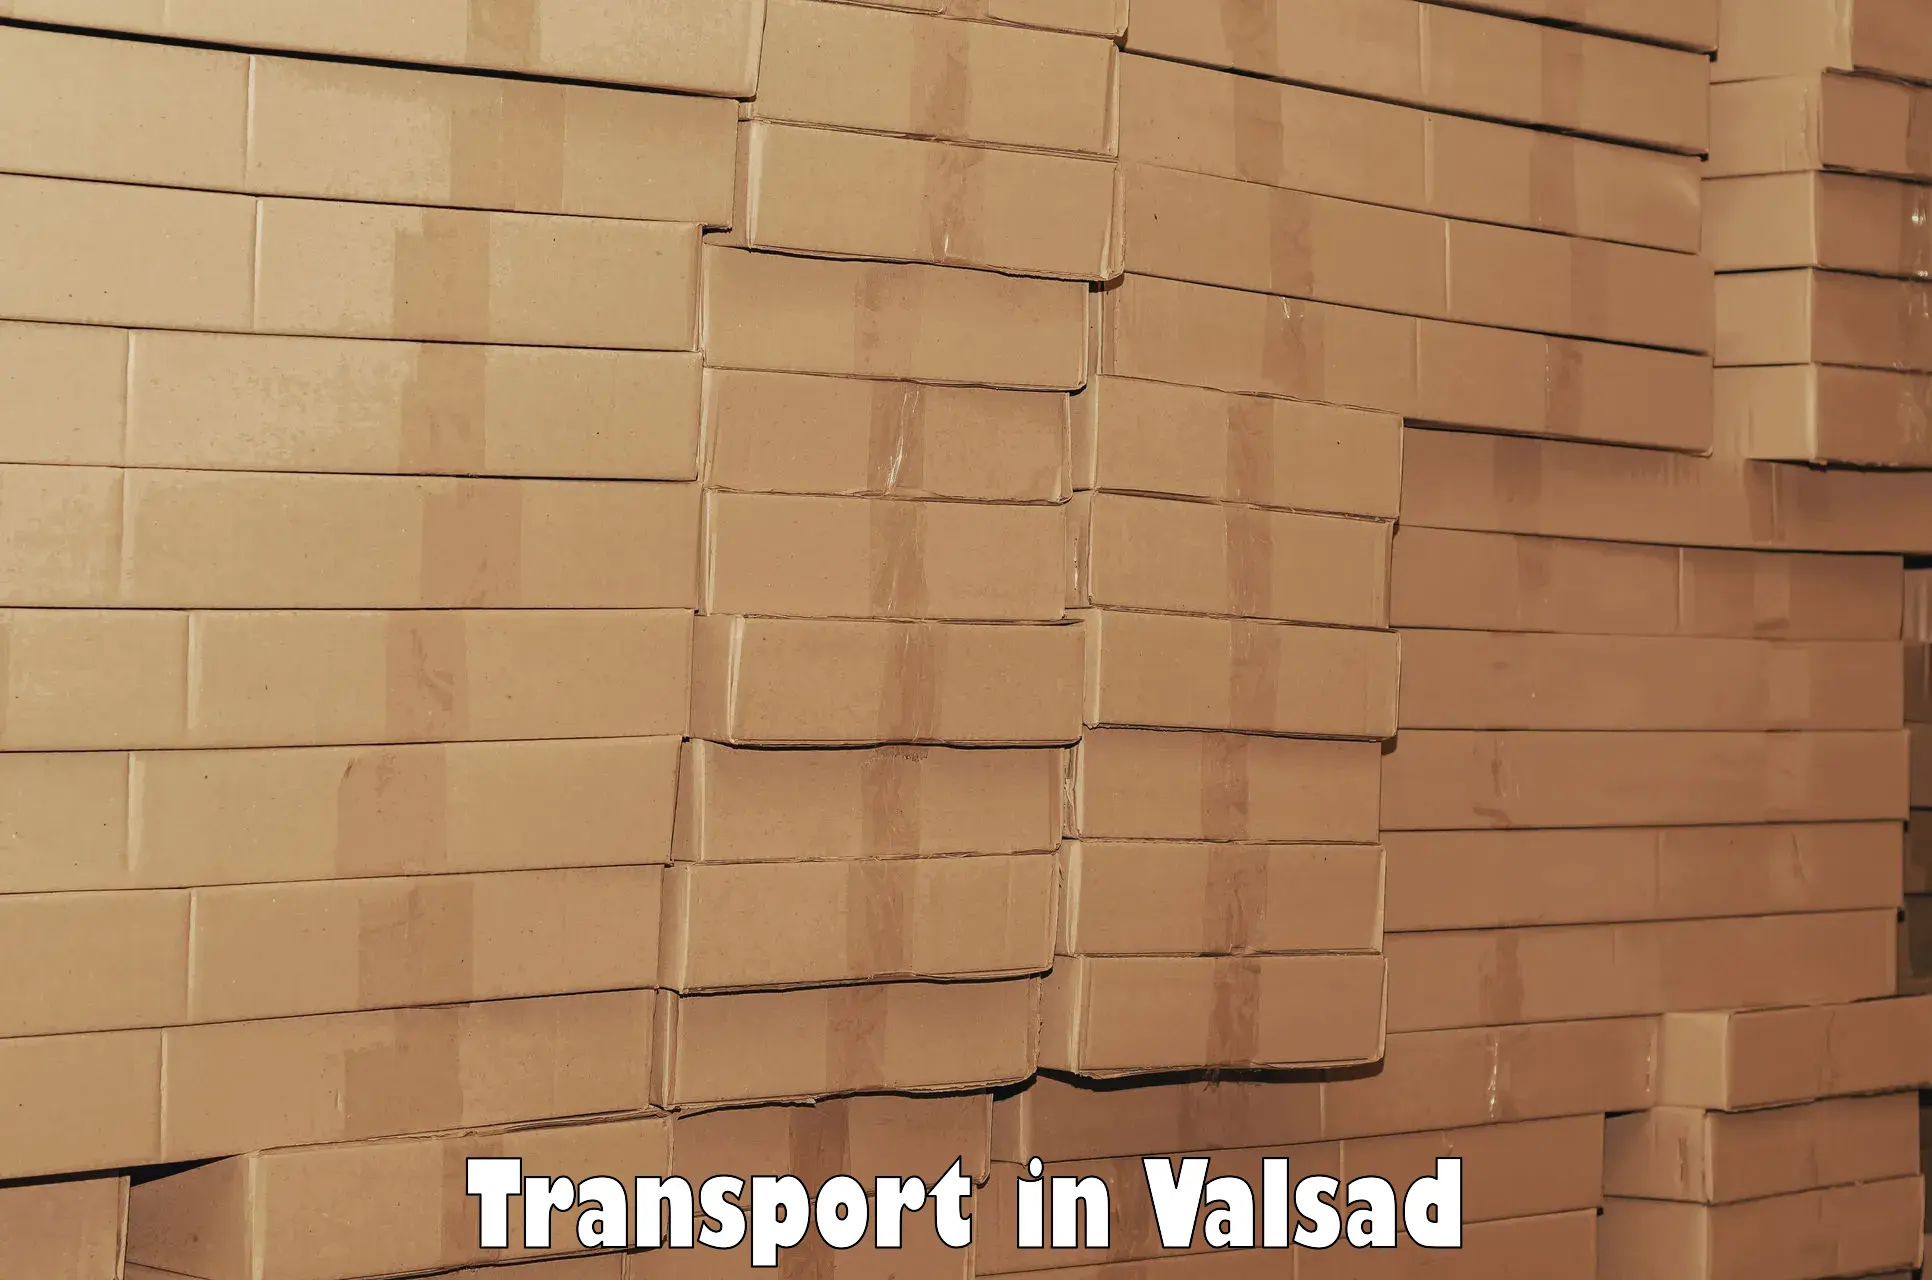 Lorry transport service in Valsad